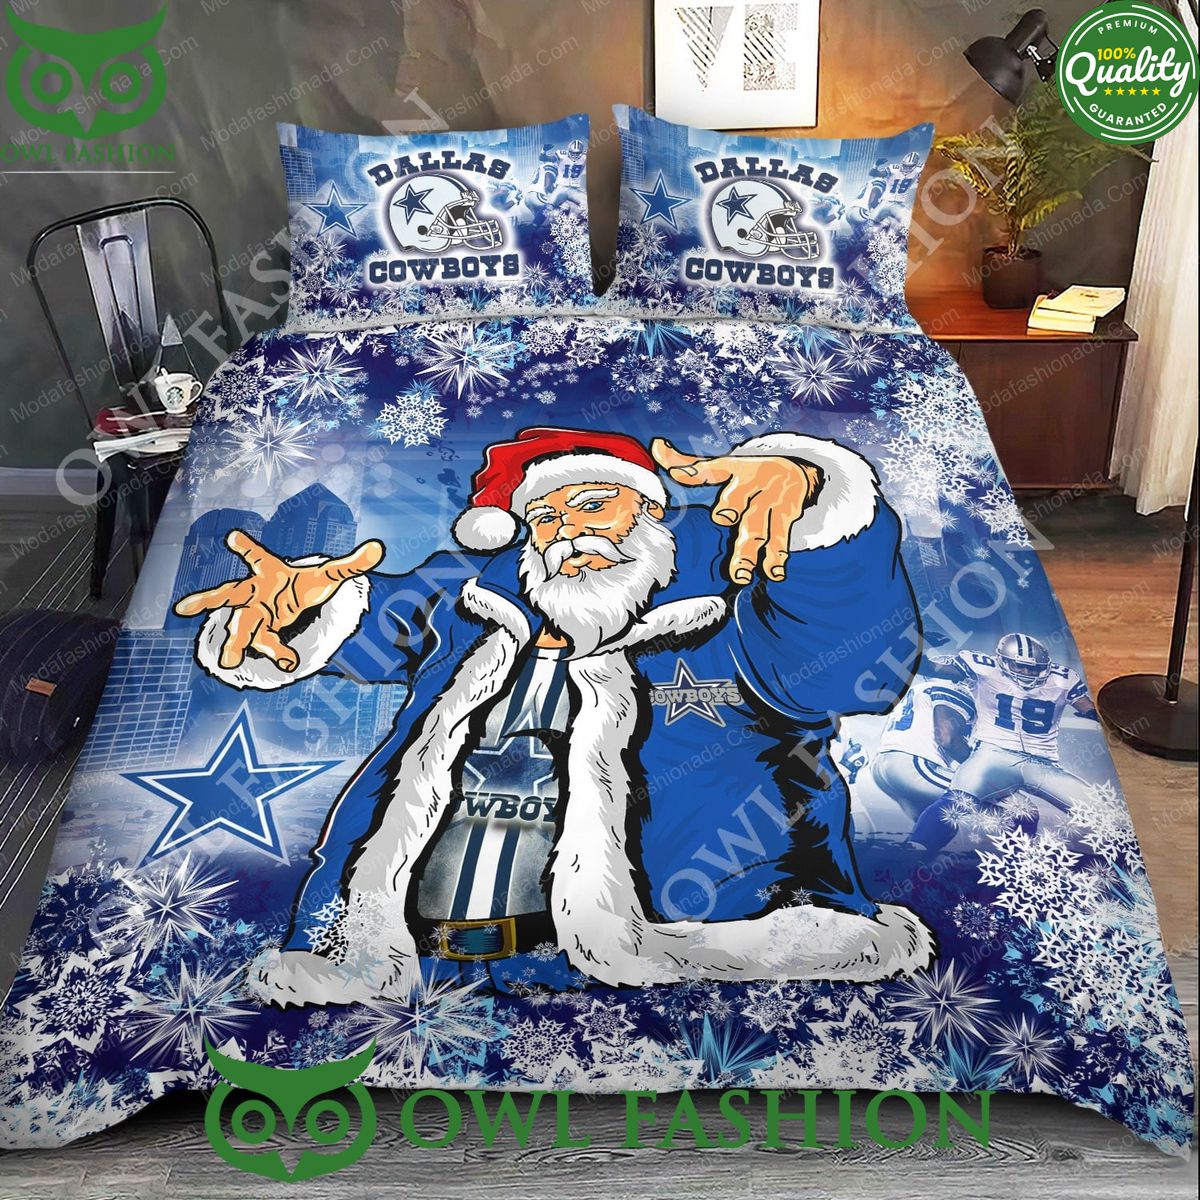 Dallas Cowboys Christmas Santa Claus Limited Bedding Set Best picture ever